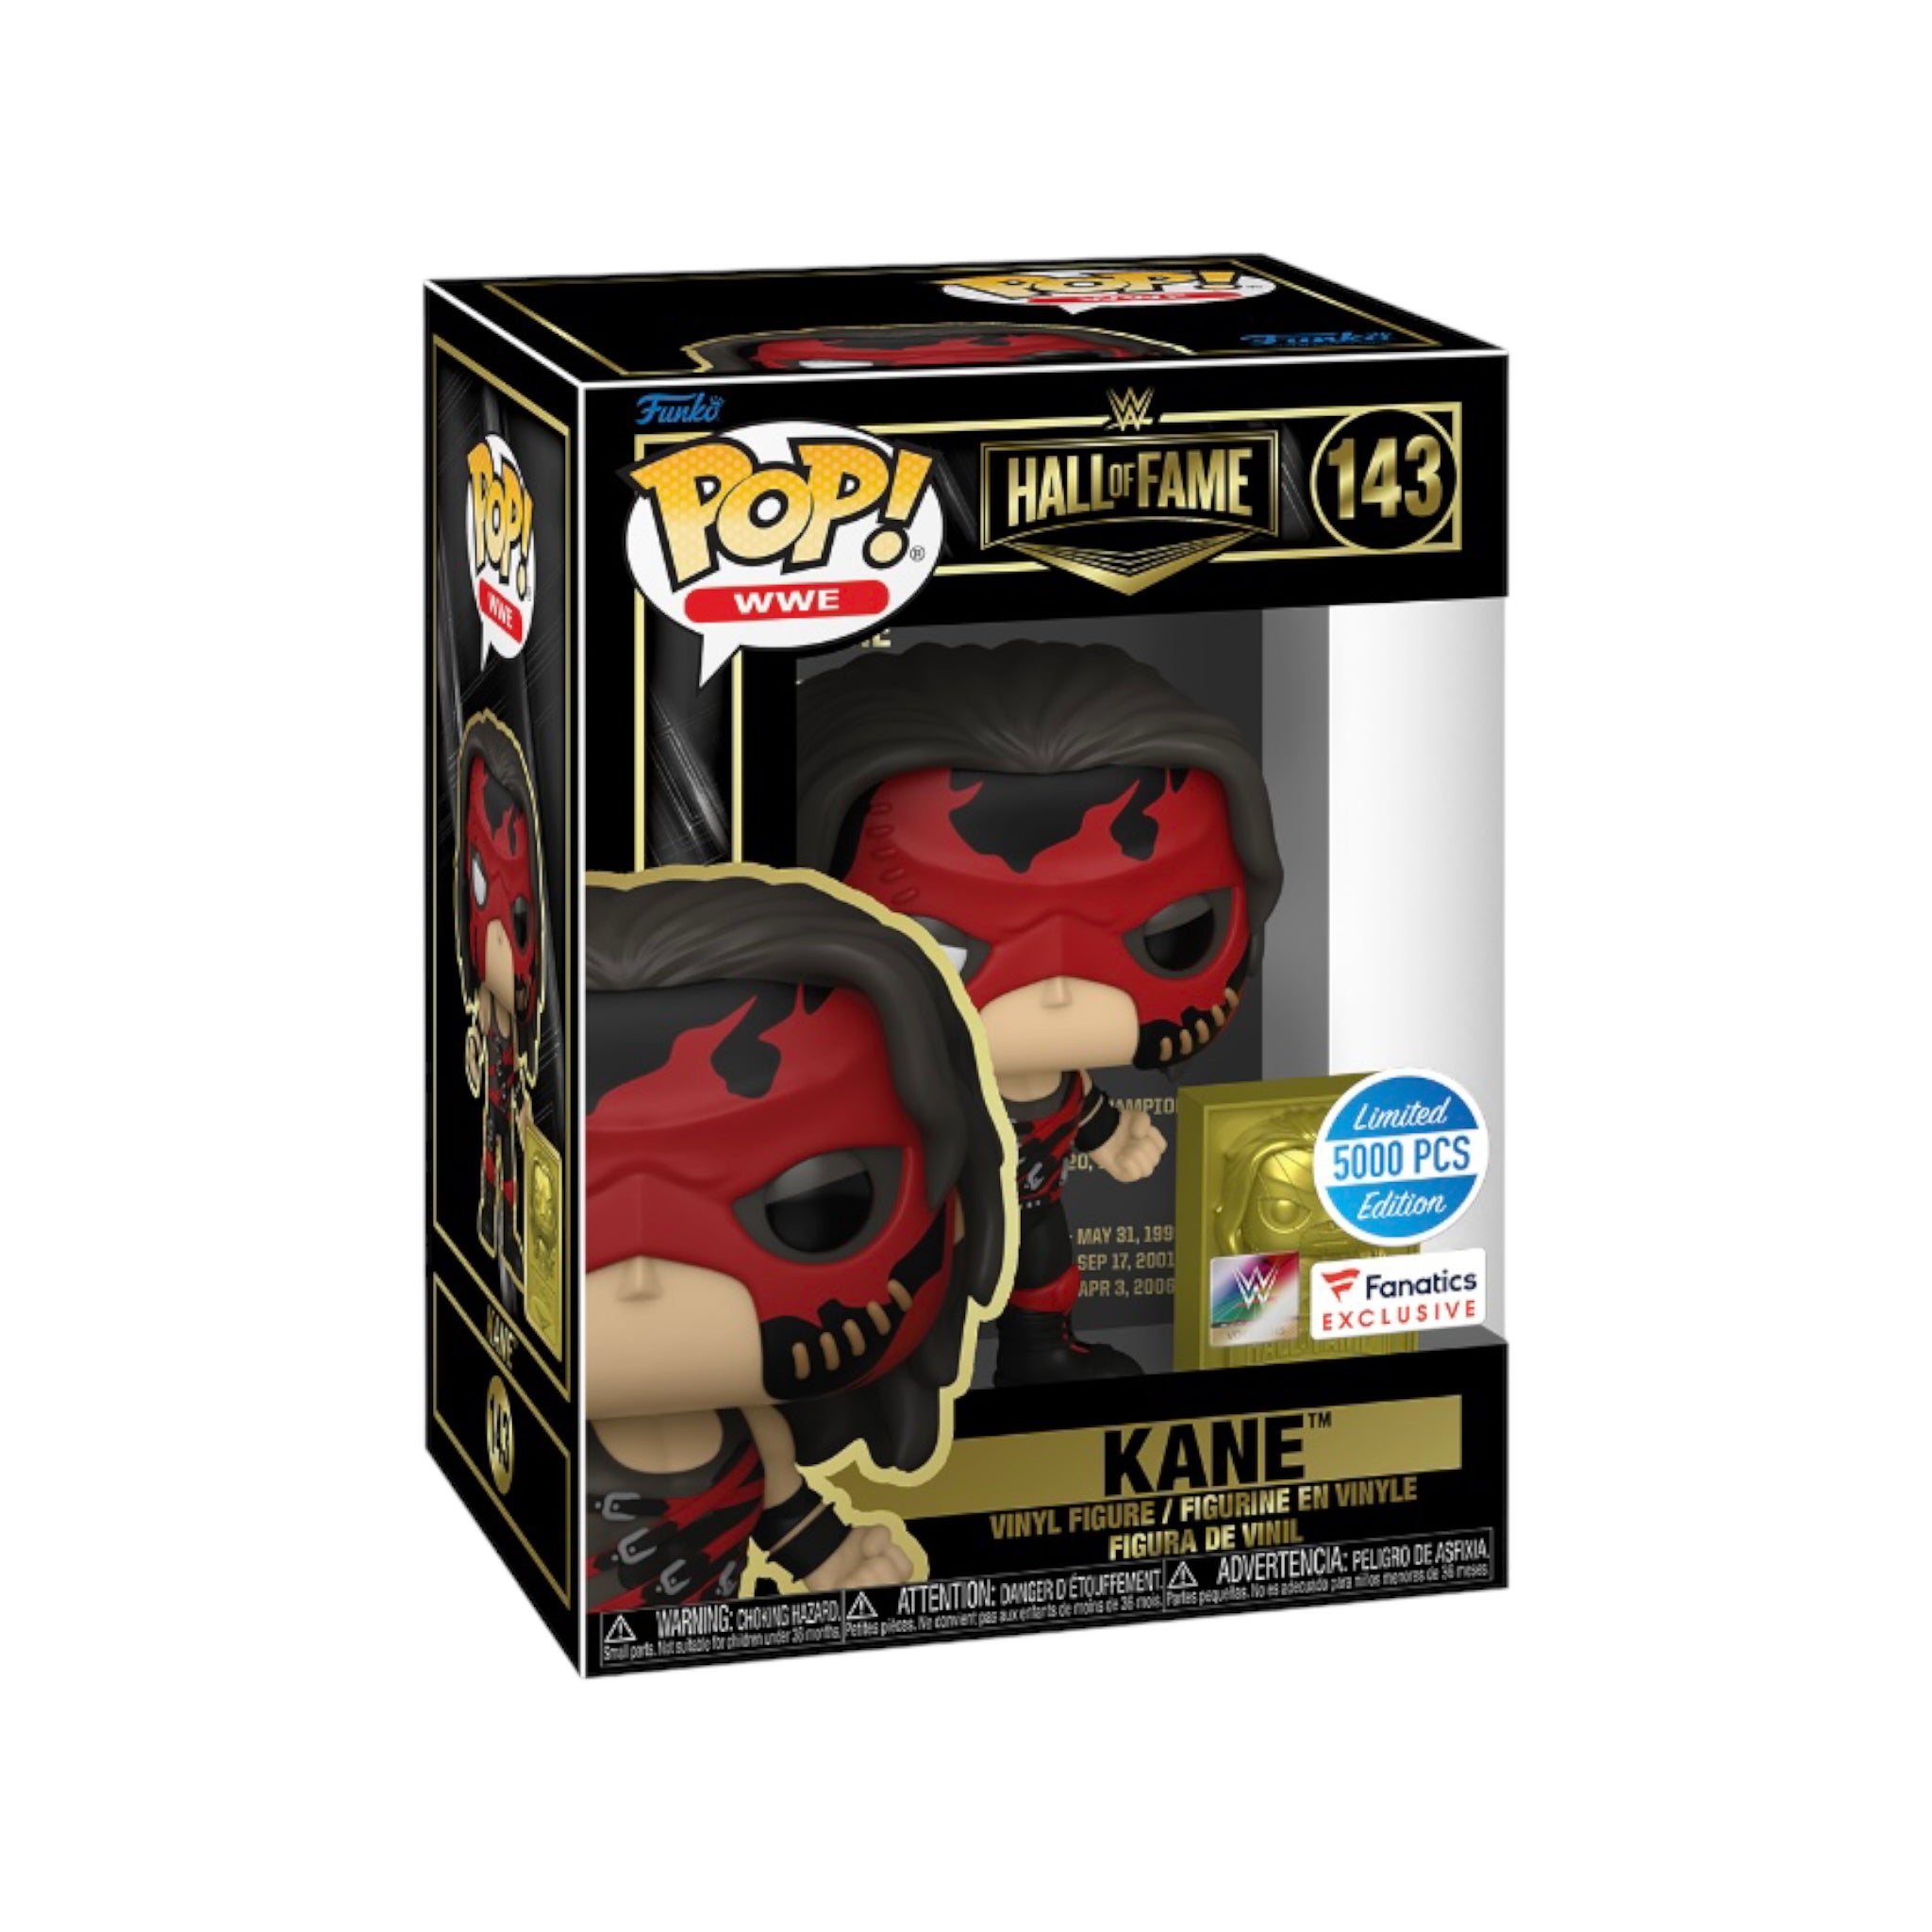 Kane #143 Funko Pop! - WWE: Hall of Fame - Fanatics Exclusive (No LE5000 Pcs Sticker)